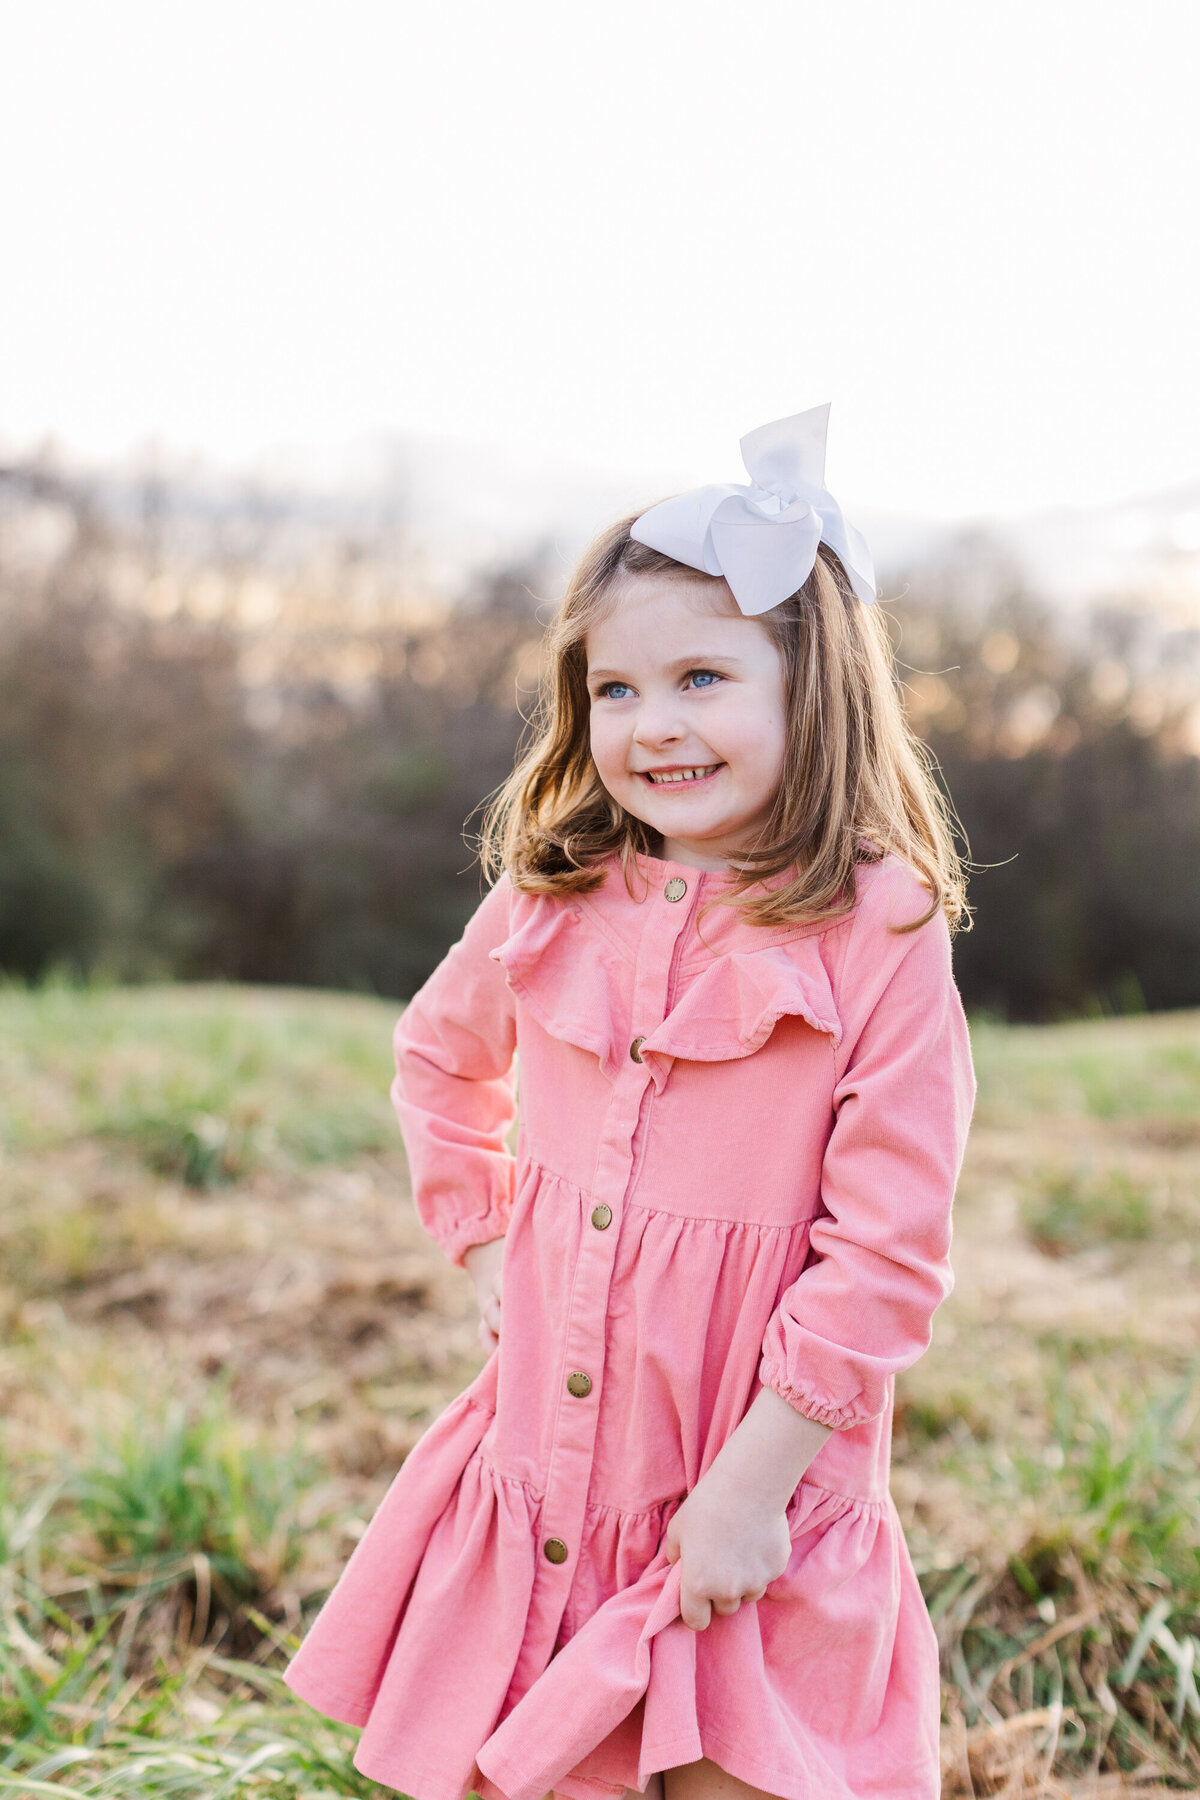 little girl wearing a pink dress smiling in a field